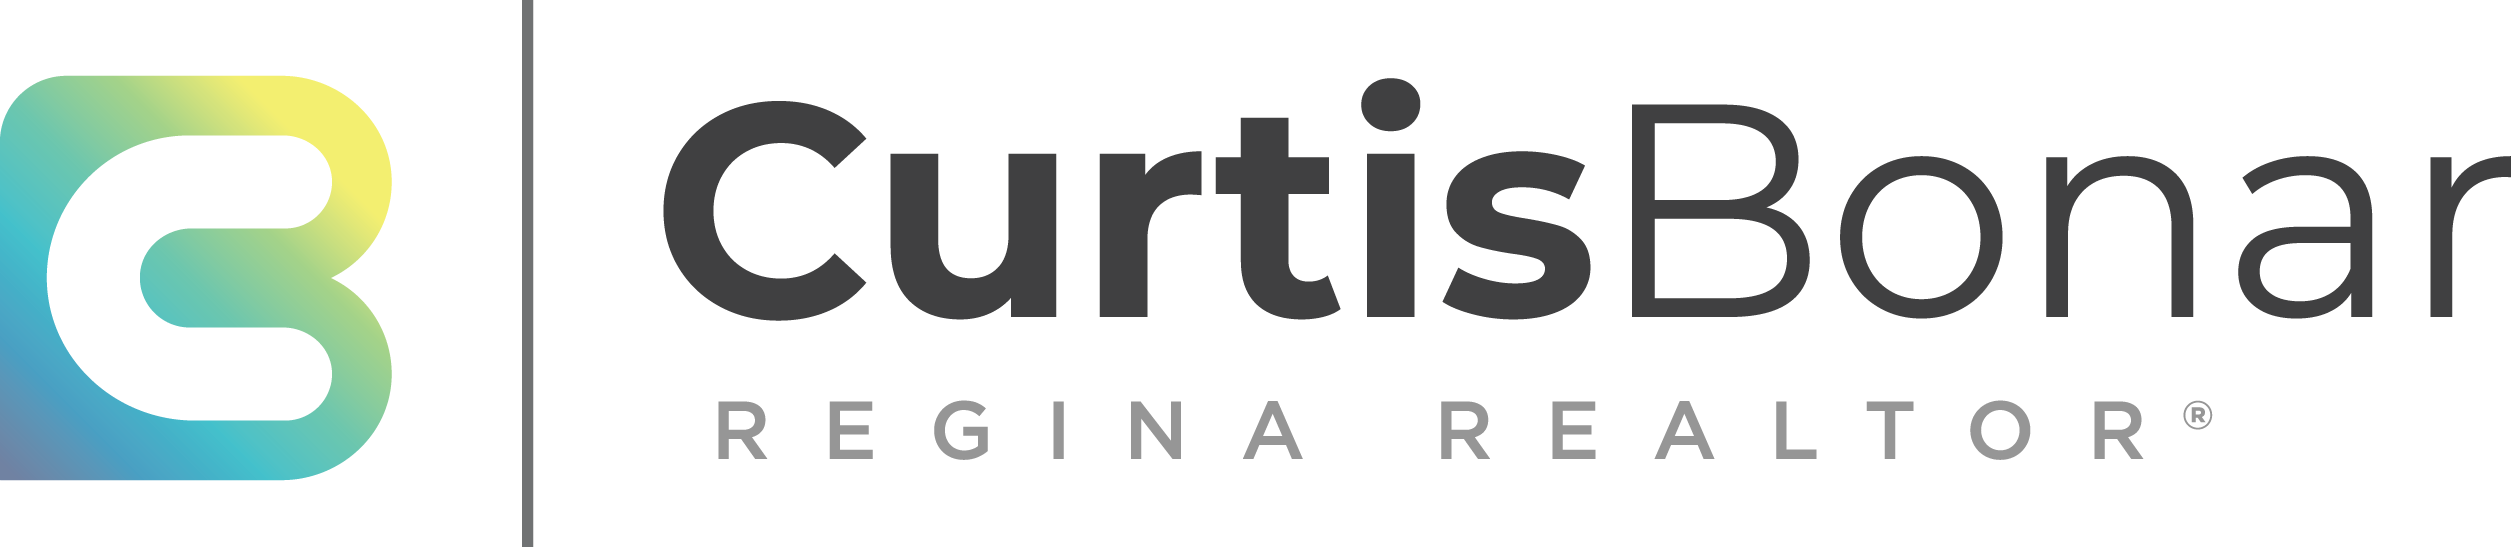 Curtis Bonar Logo FINAL